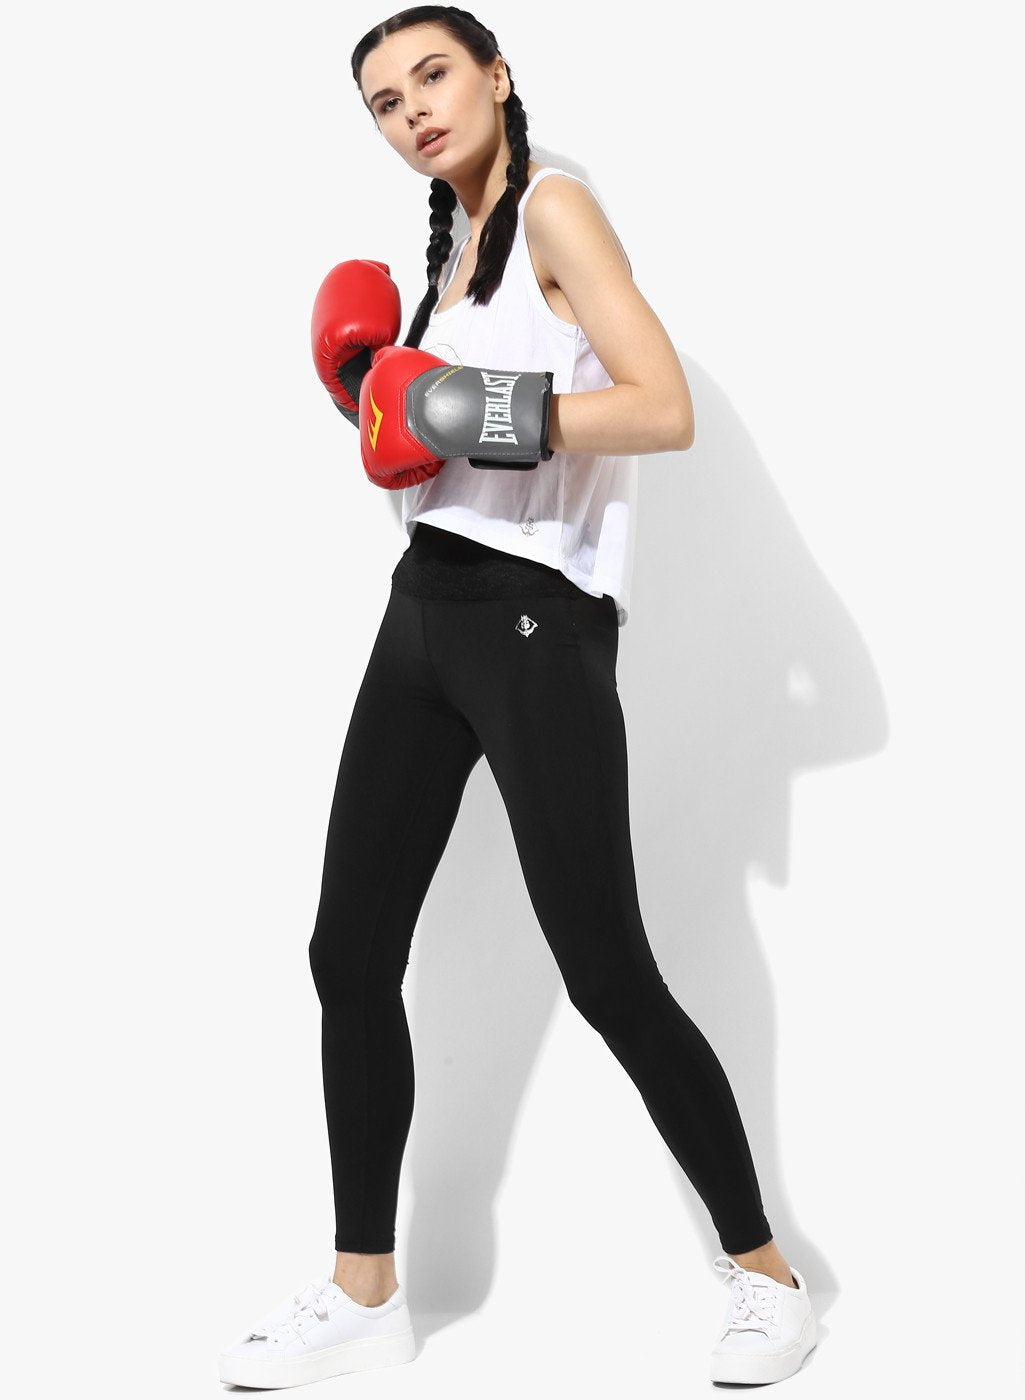 Spiritual Warrior gym Workout wear Yoga pants Athleisure black leggings